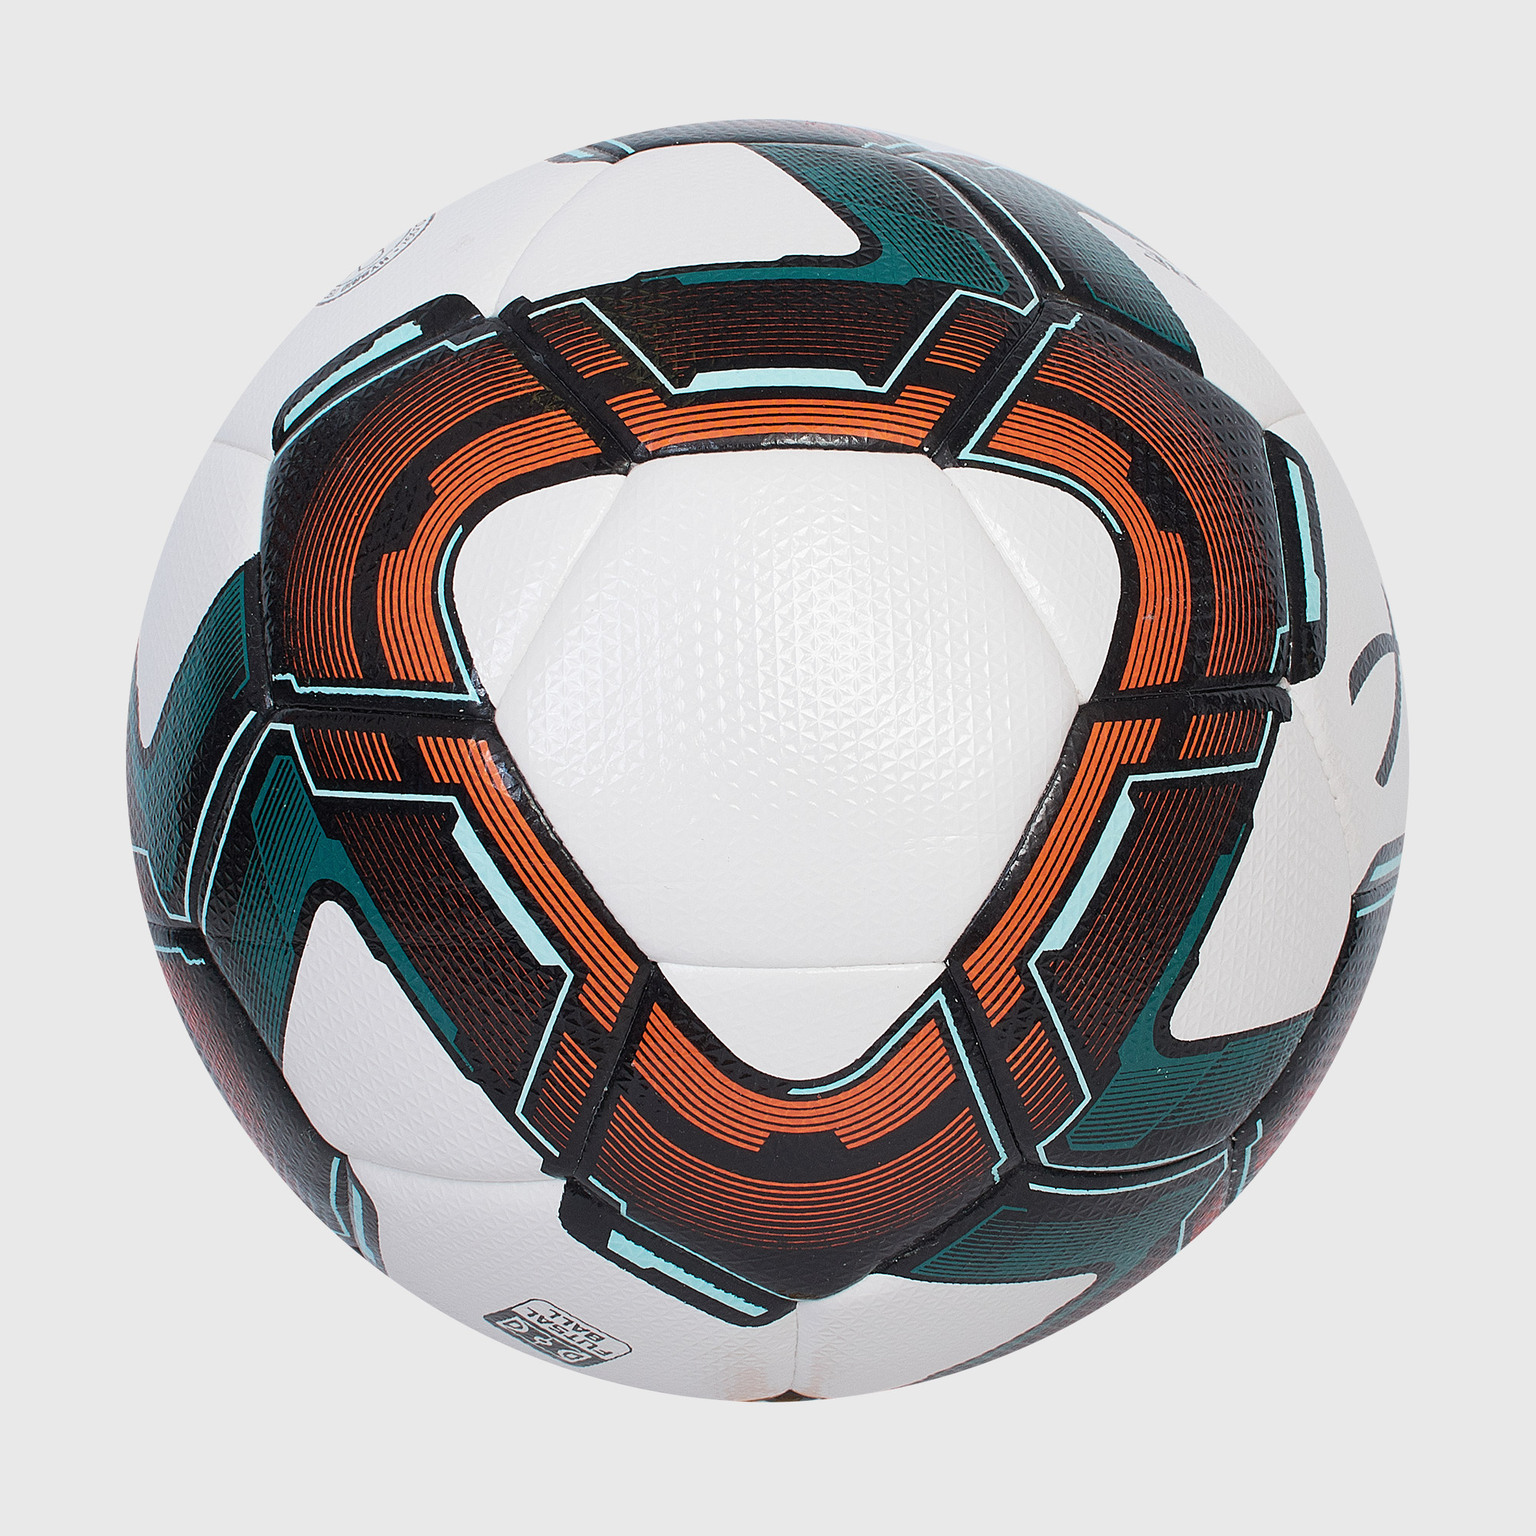 Футзальный мяч Jogel Inspire Futsal УТ-00017617